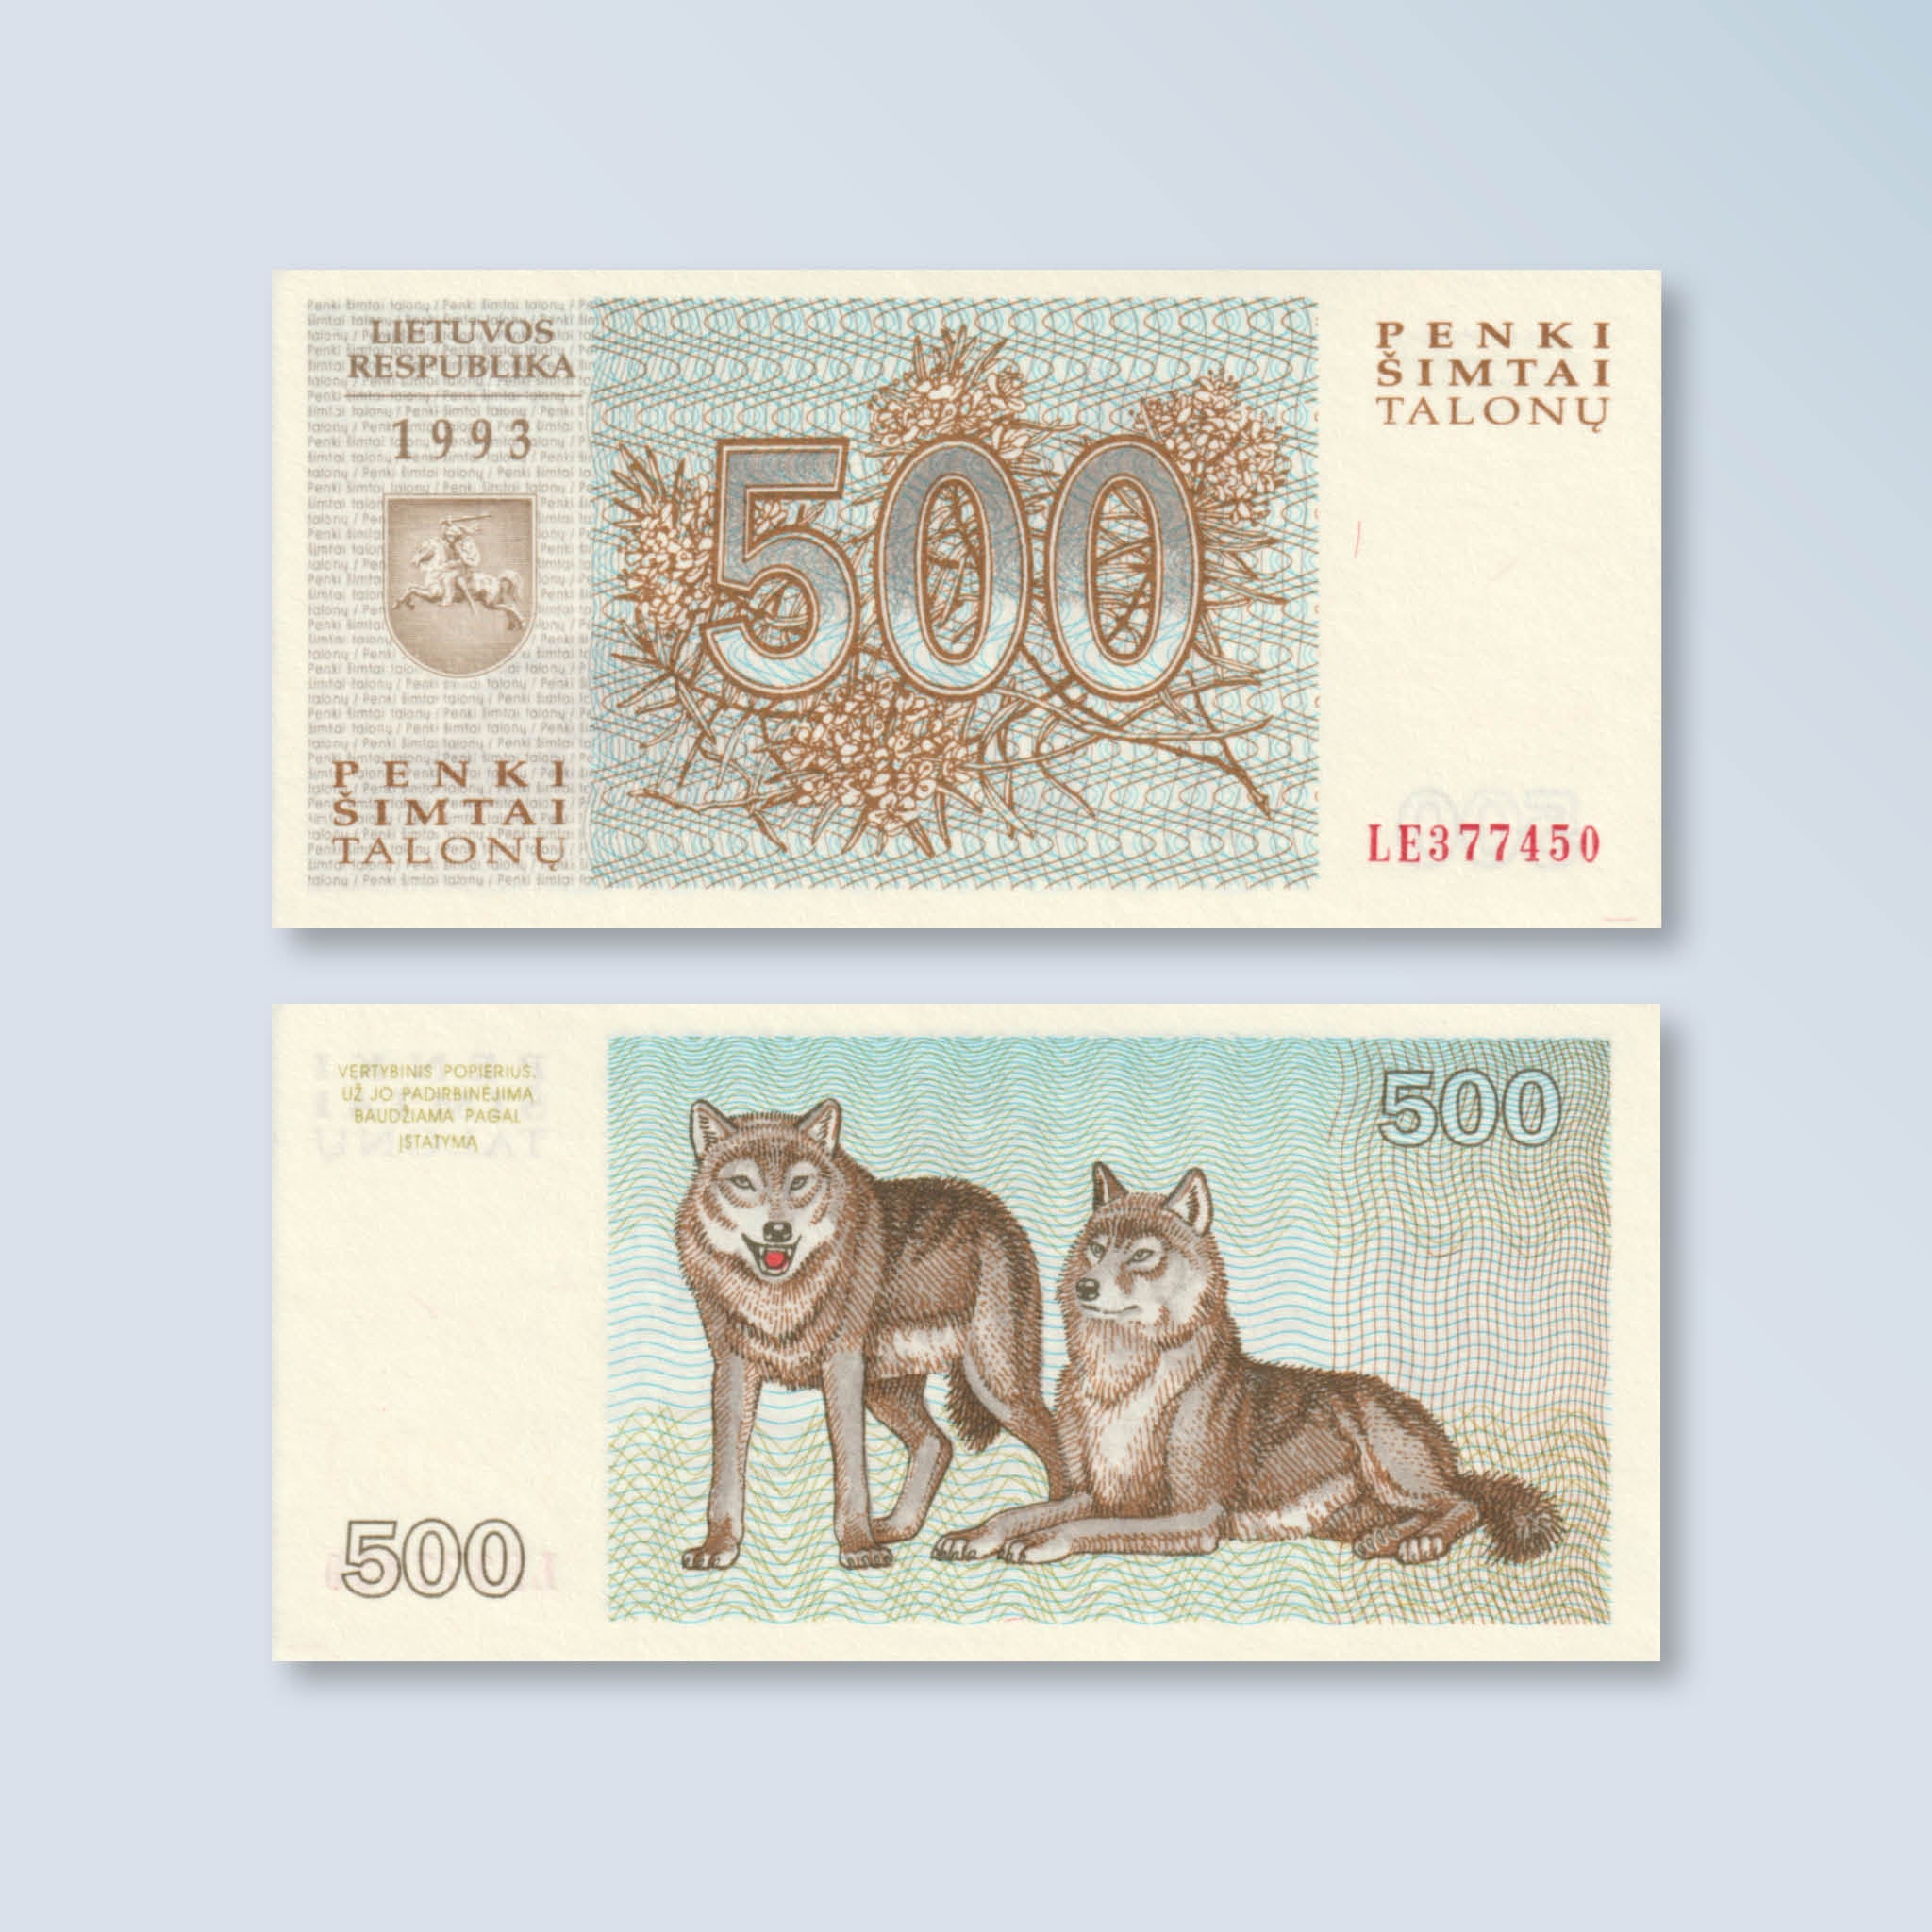 Lithuania 500 Talonas, 1993, B157a, P46, UNC - Robert's World Money - World Banknotes